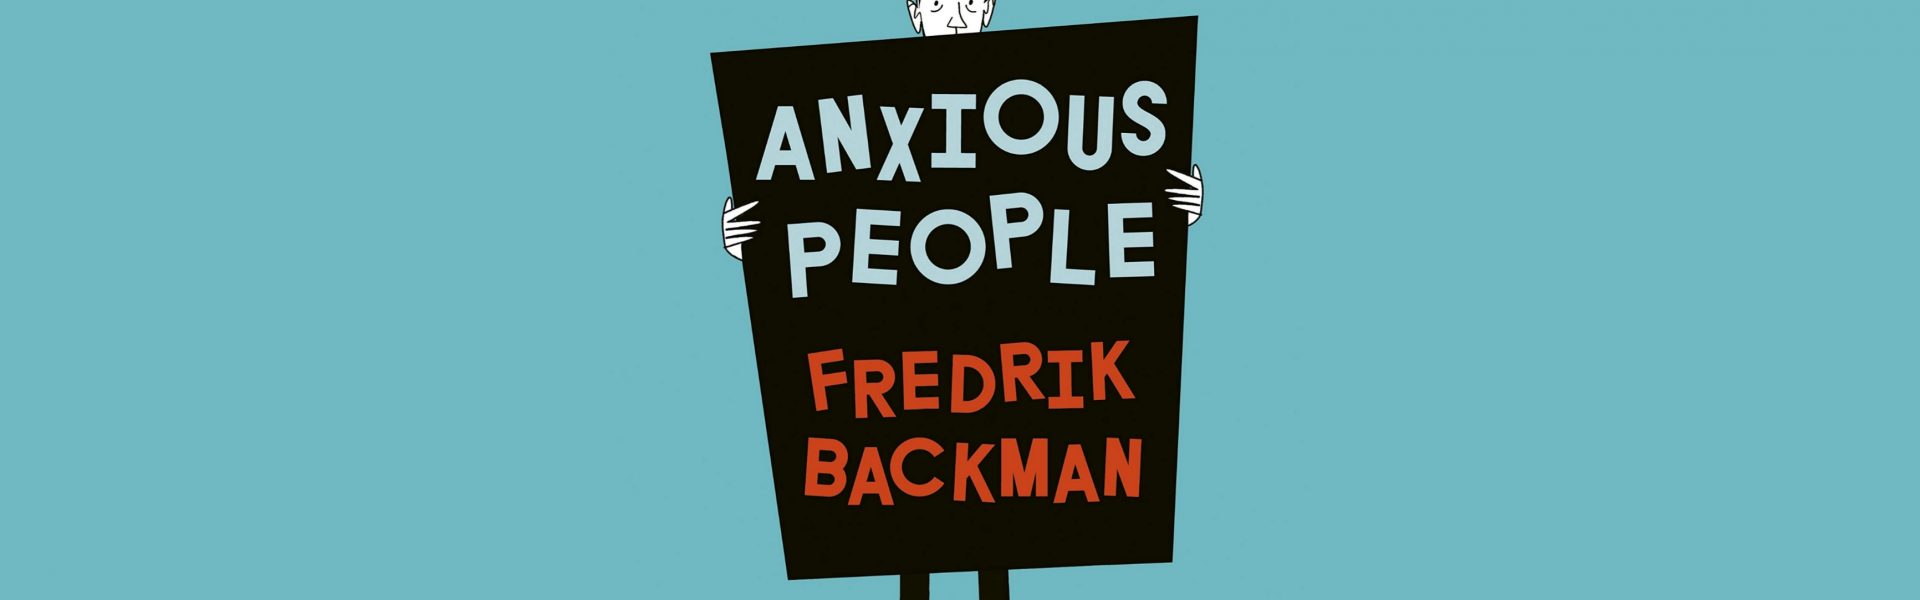 Anxious people by Fredrik Backman